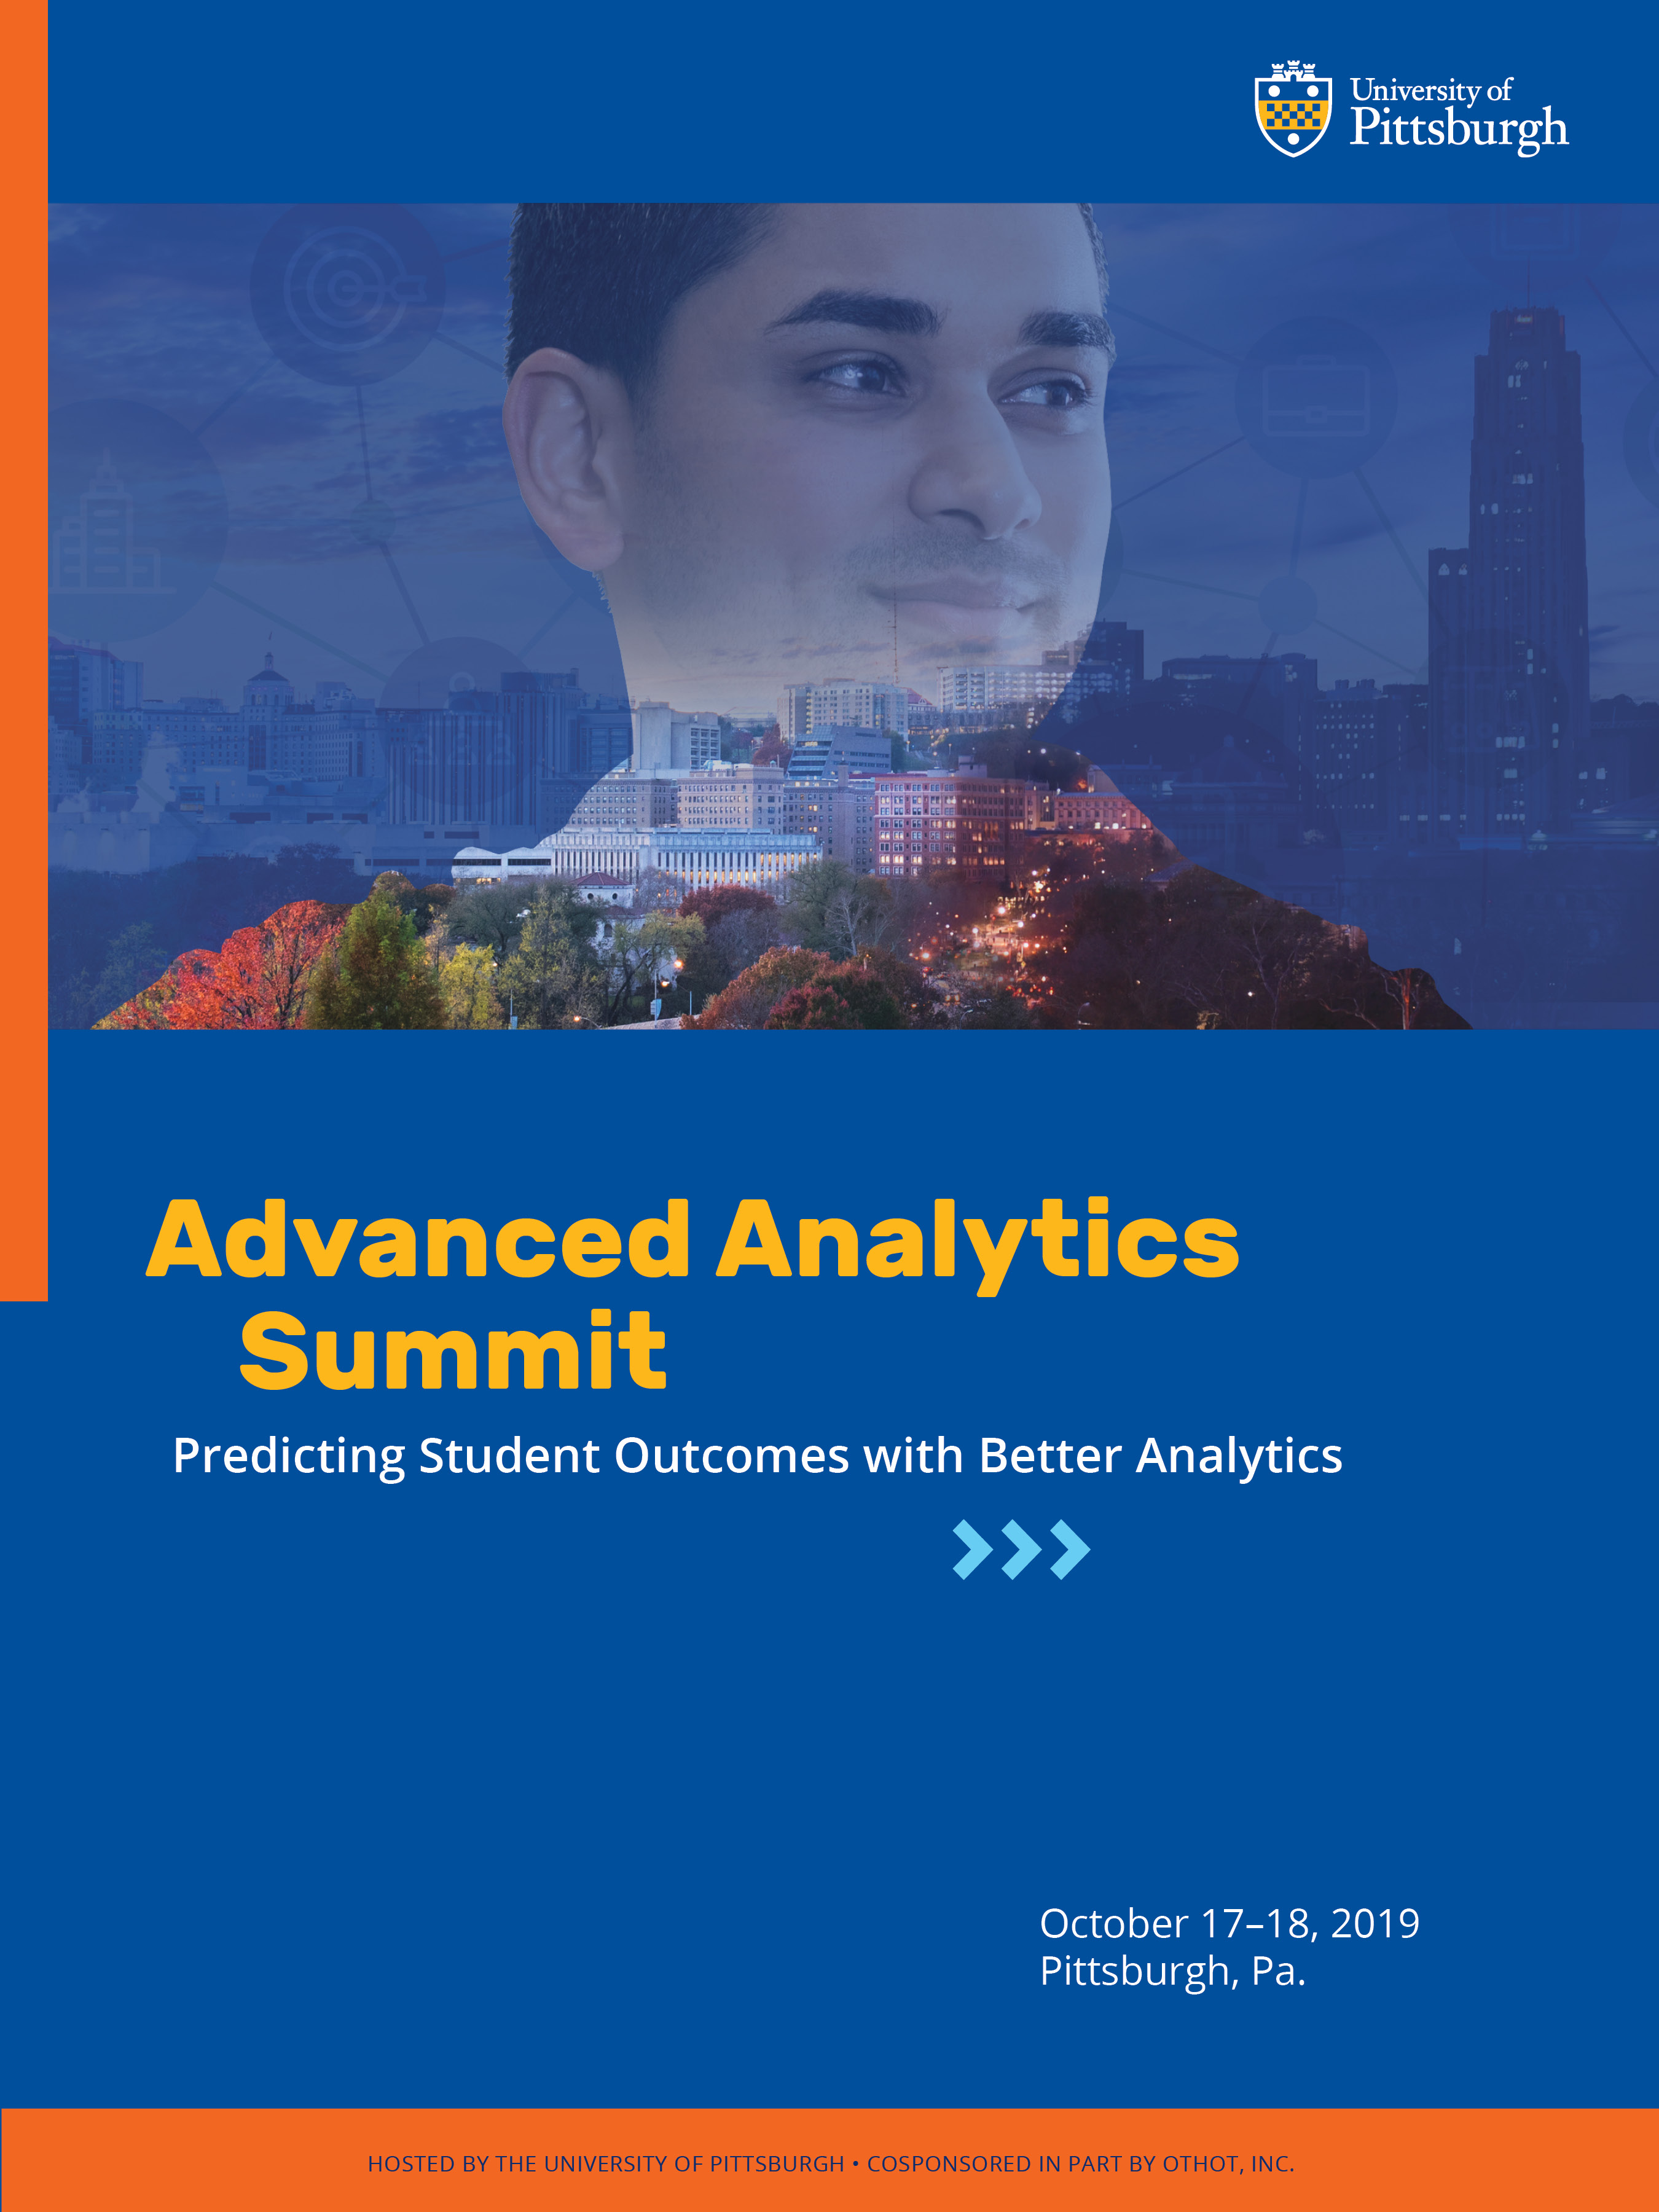 Advanced Analytics Summit Program